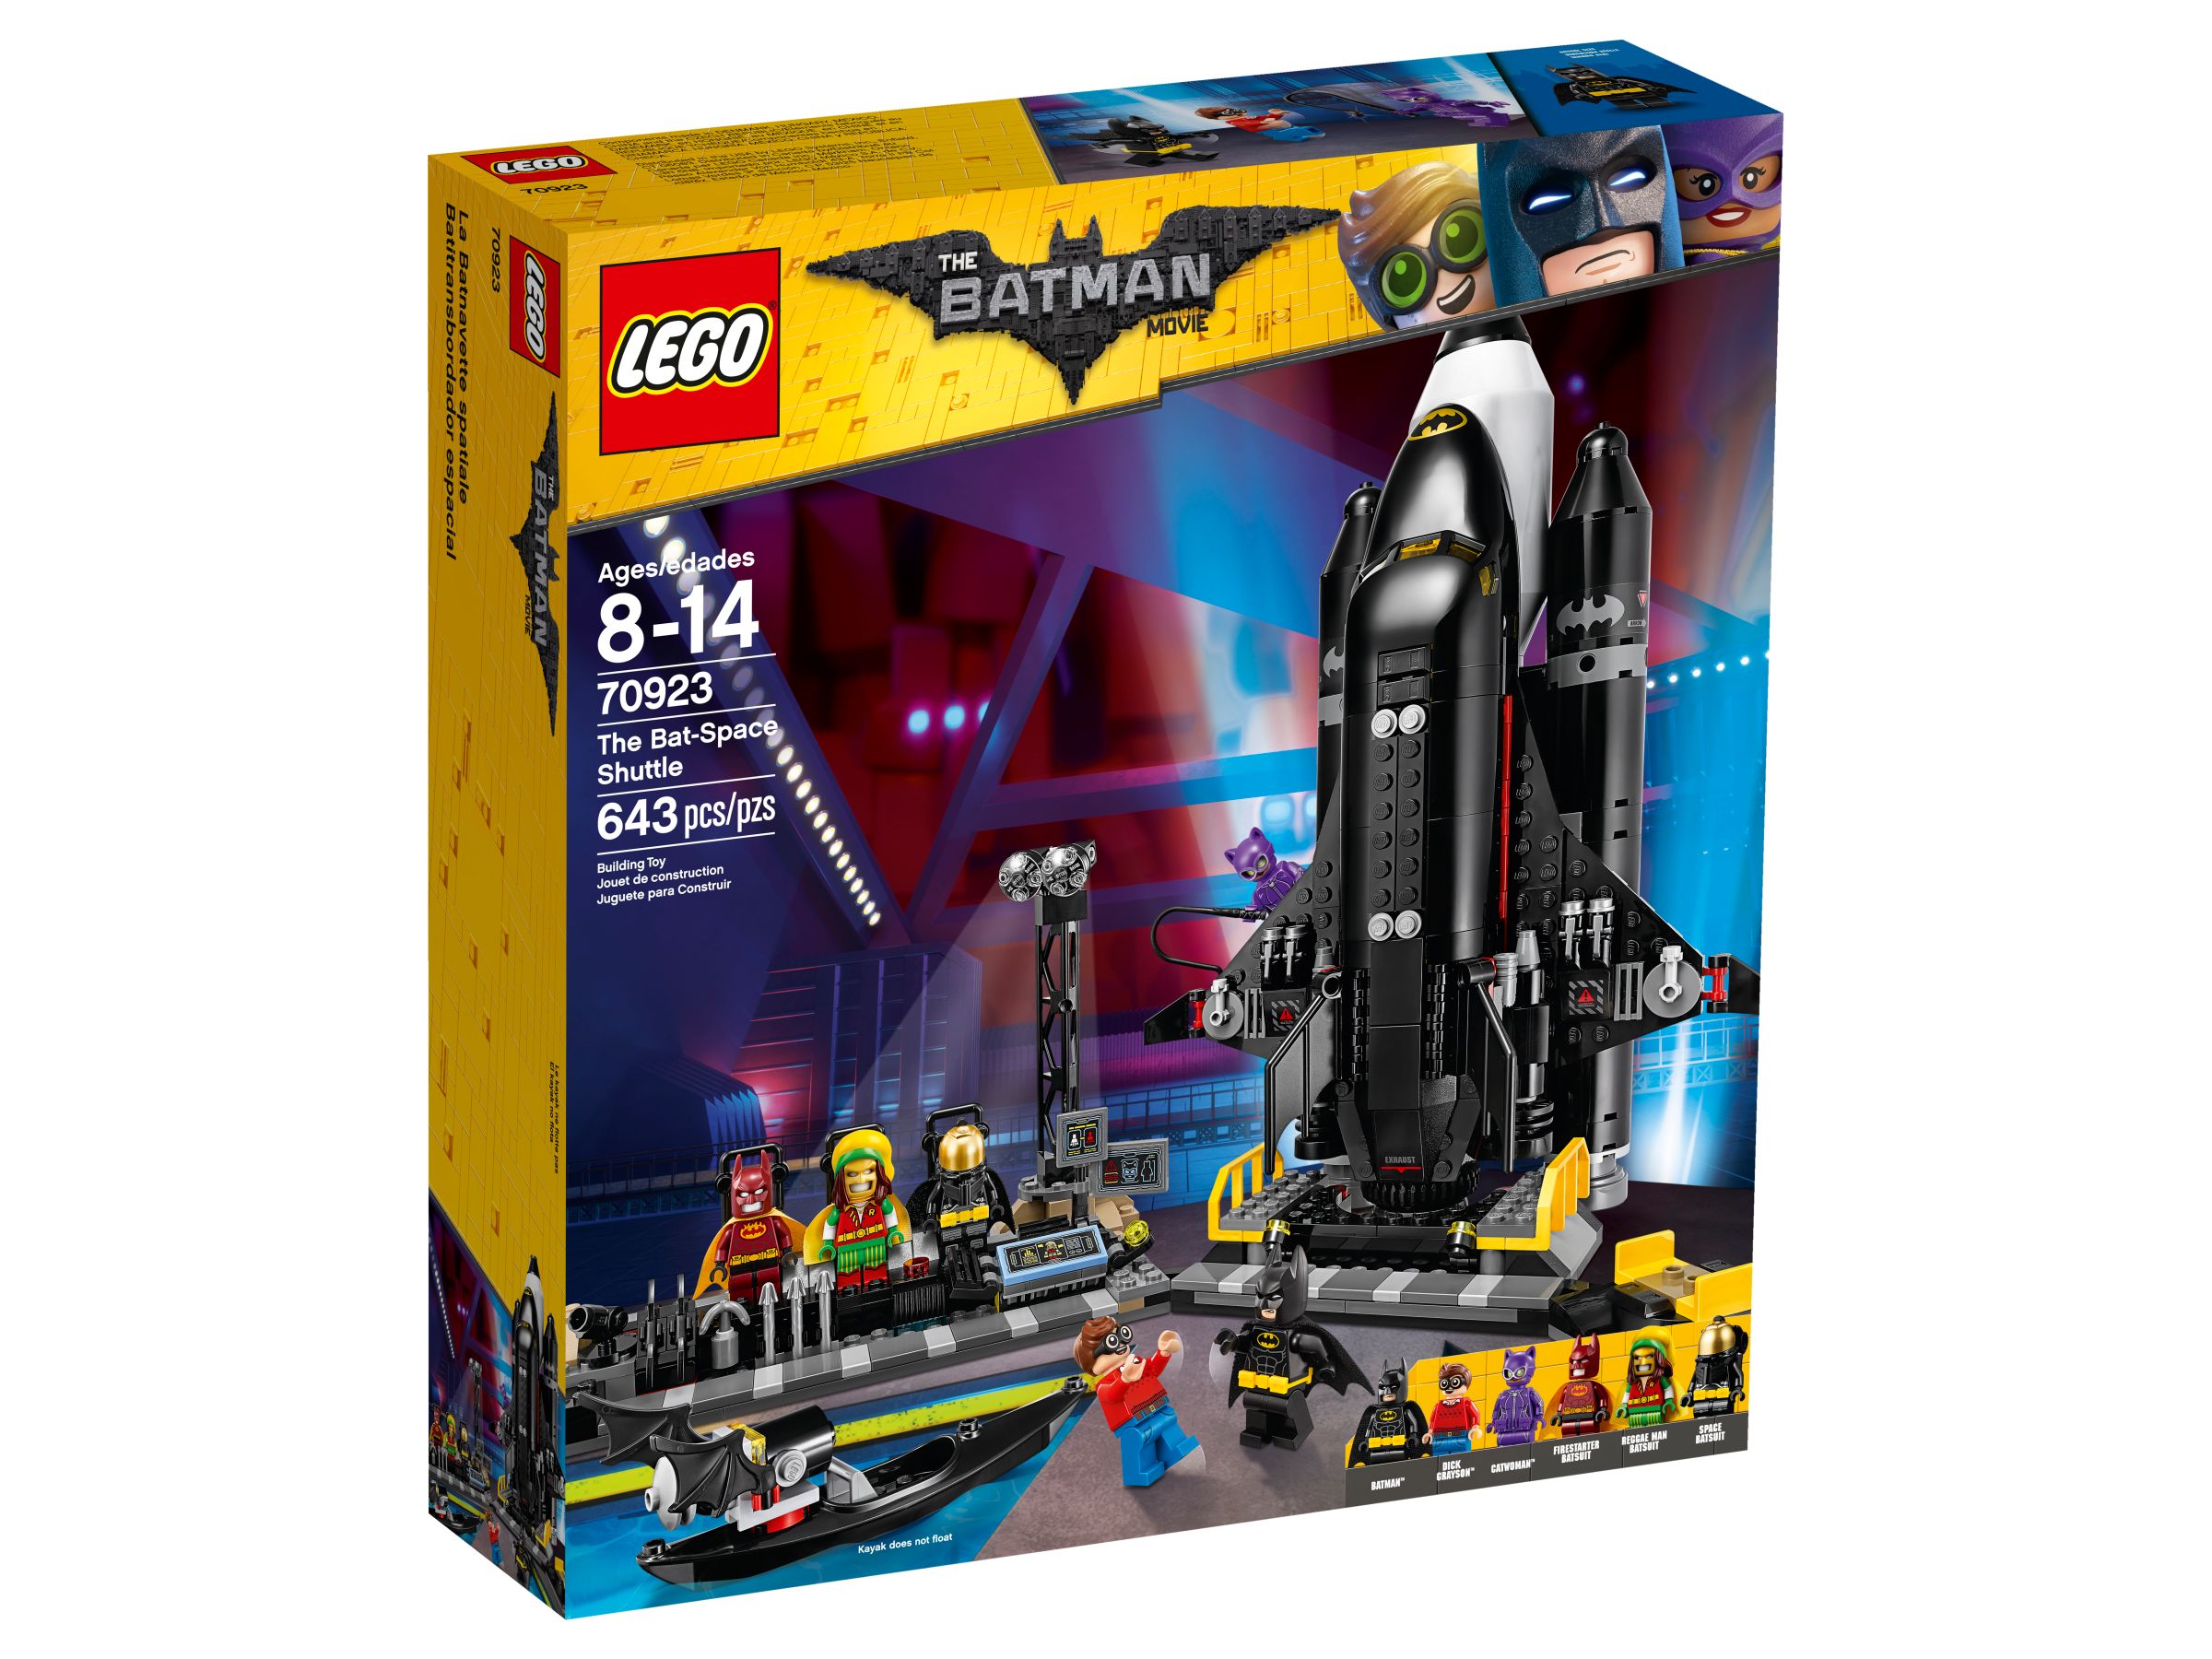 LEGO The LEGO Batman Movie 70923 Batman Spaceshuttle LEGO_70923_alt1.jpg